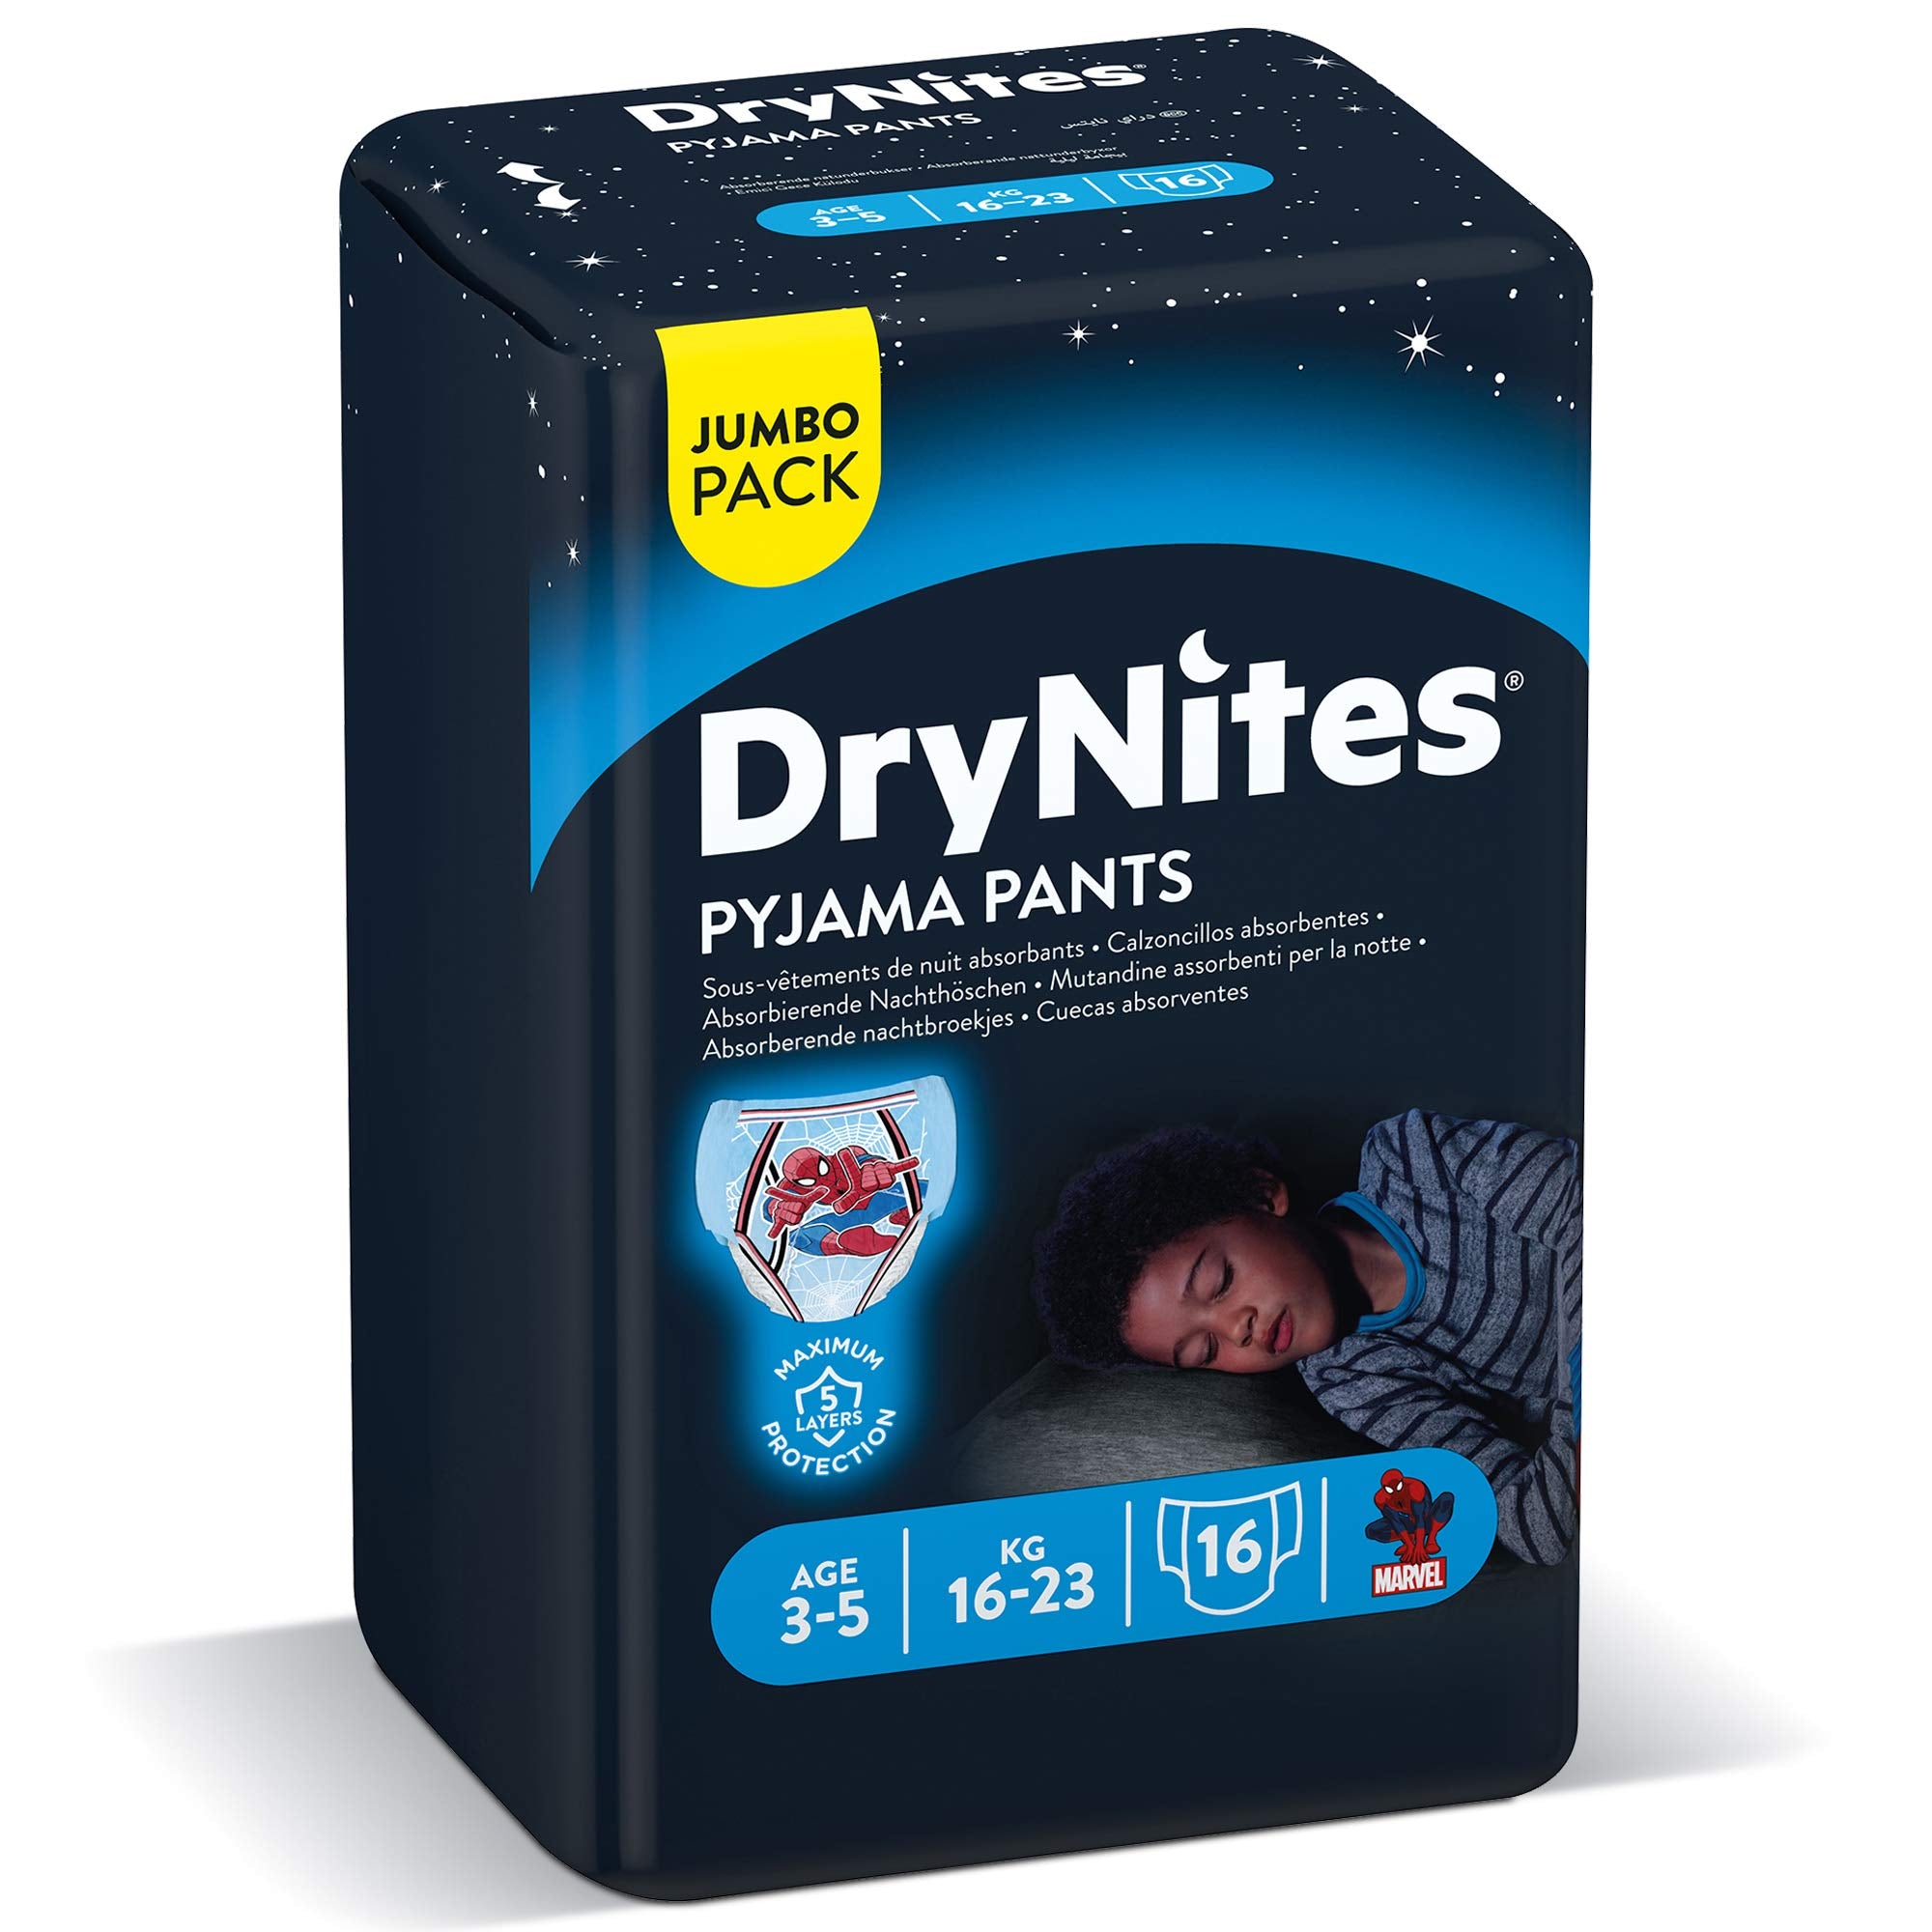 Drynites Pyjama Pants, Age 3-5 Y, Boy, 16-23 Kg, 16 Bed Wetting Pants  مرر المؤشر فوق الصورة لتكبيرها بنطلون بيجامة للاولاد من دراينتس، لعمر 3-5 سنوات، 16-23 كغم، 16 بنطلون مبطن للسرير